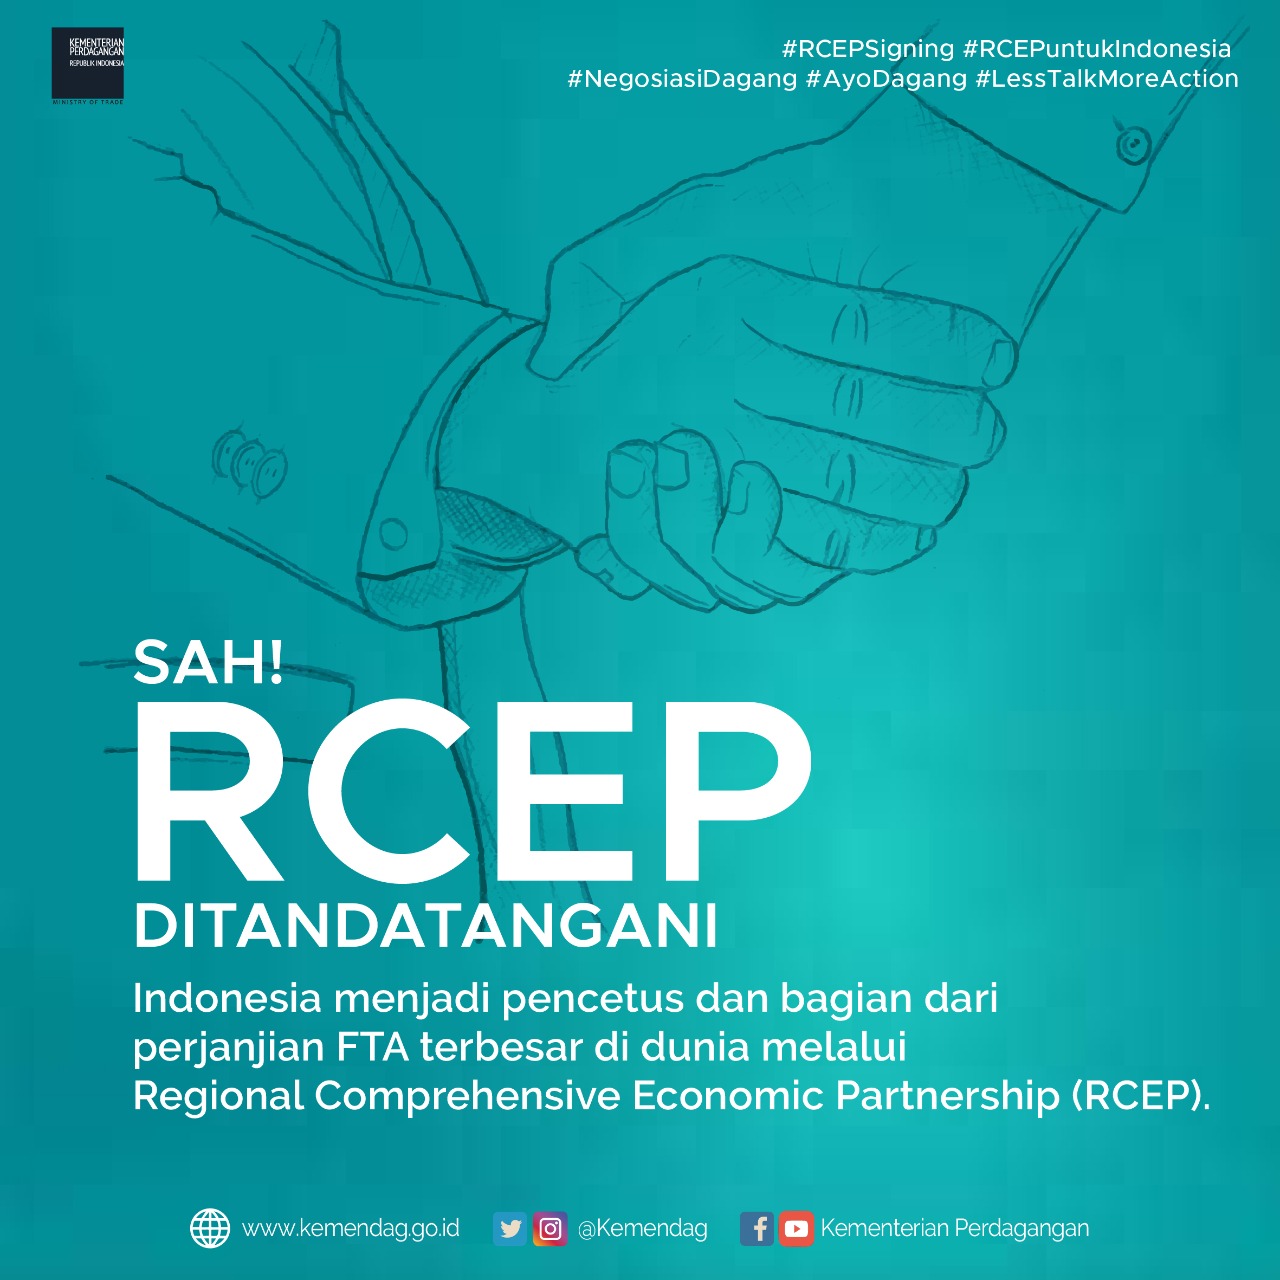 Regional Comprehensive Economic Partnership (RCEP) signed